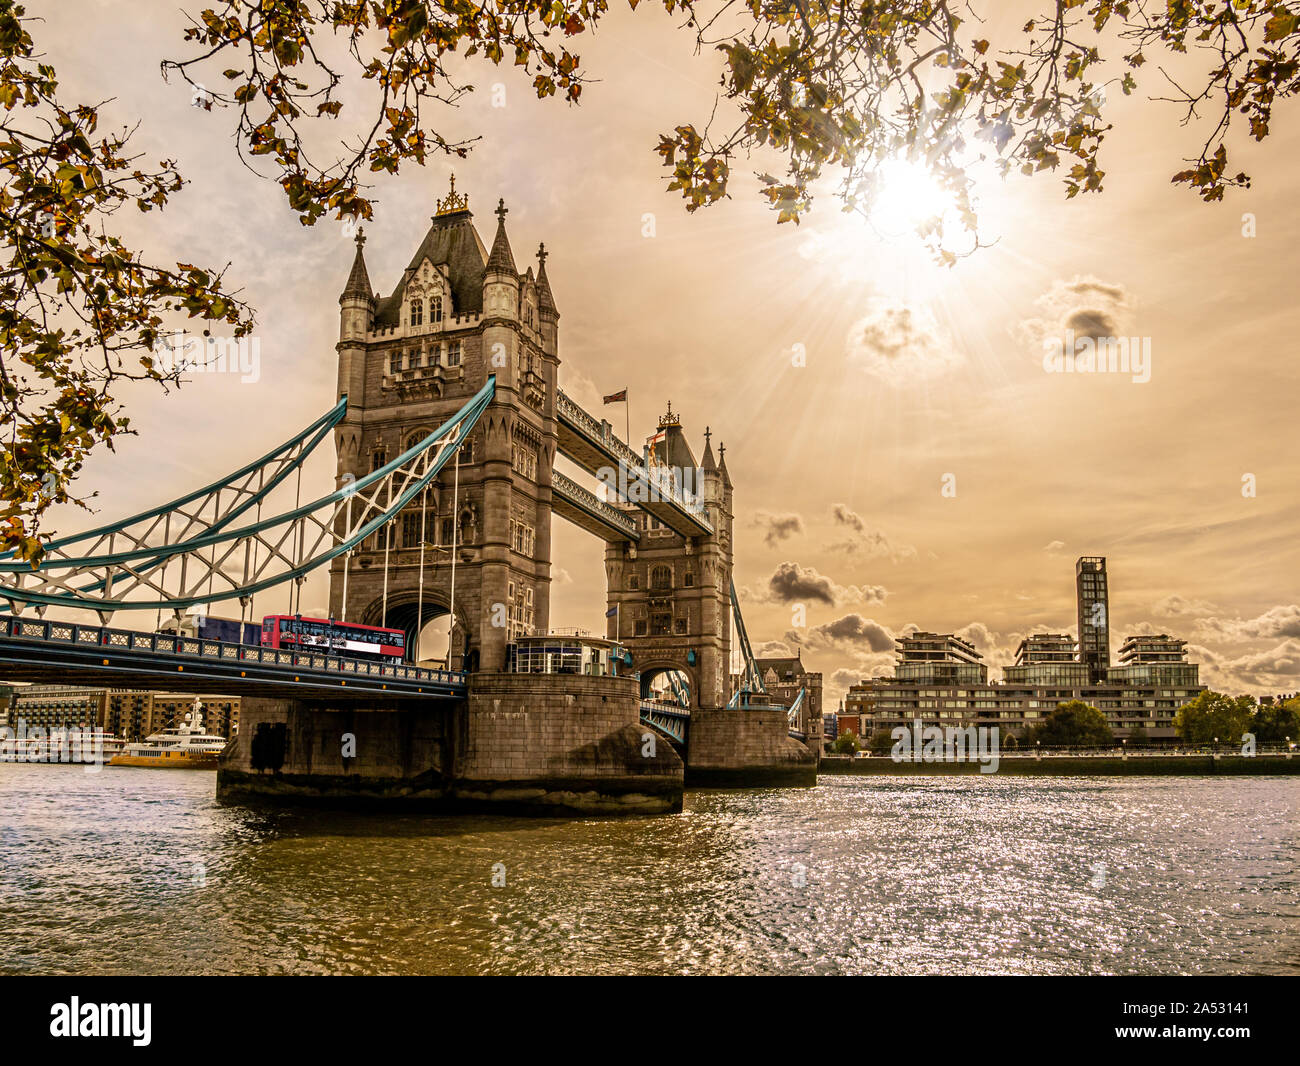 Cityscape view of  London with the famous Tower Bridge landmark in autumn season Stock Photo